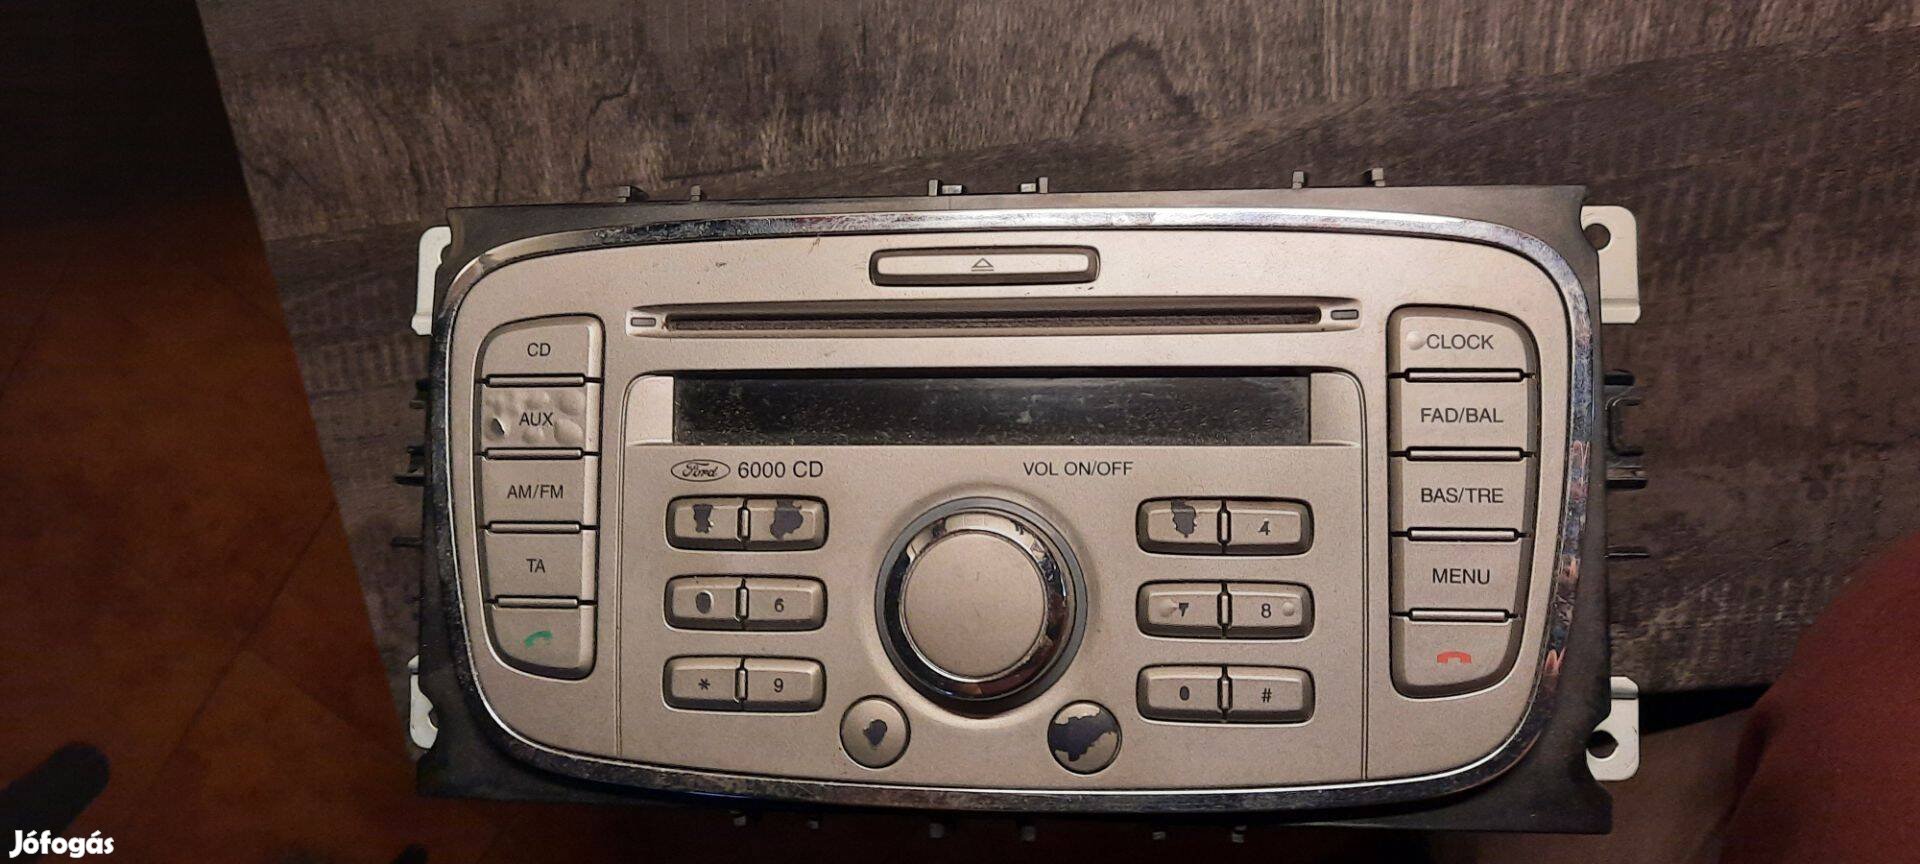 Ford rádió-cd lejátszó focus,c-max,mondeo,transit stb